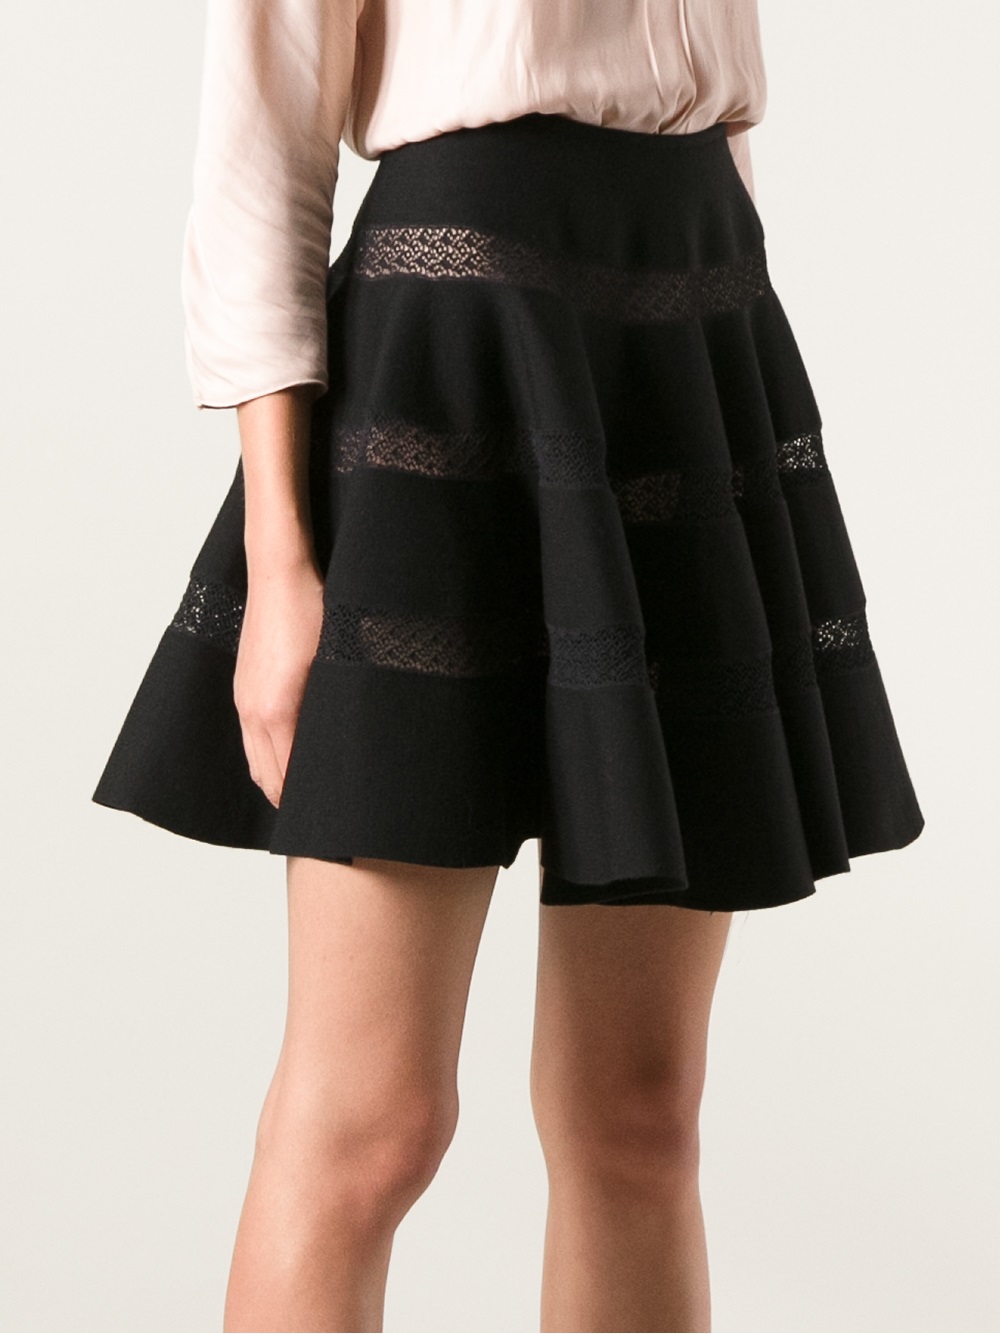 Lyst - Alaïa Lace Insert Skirt in Black